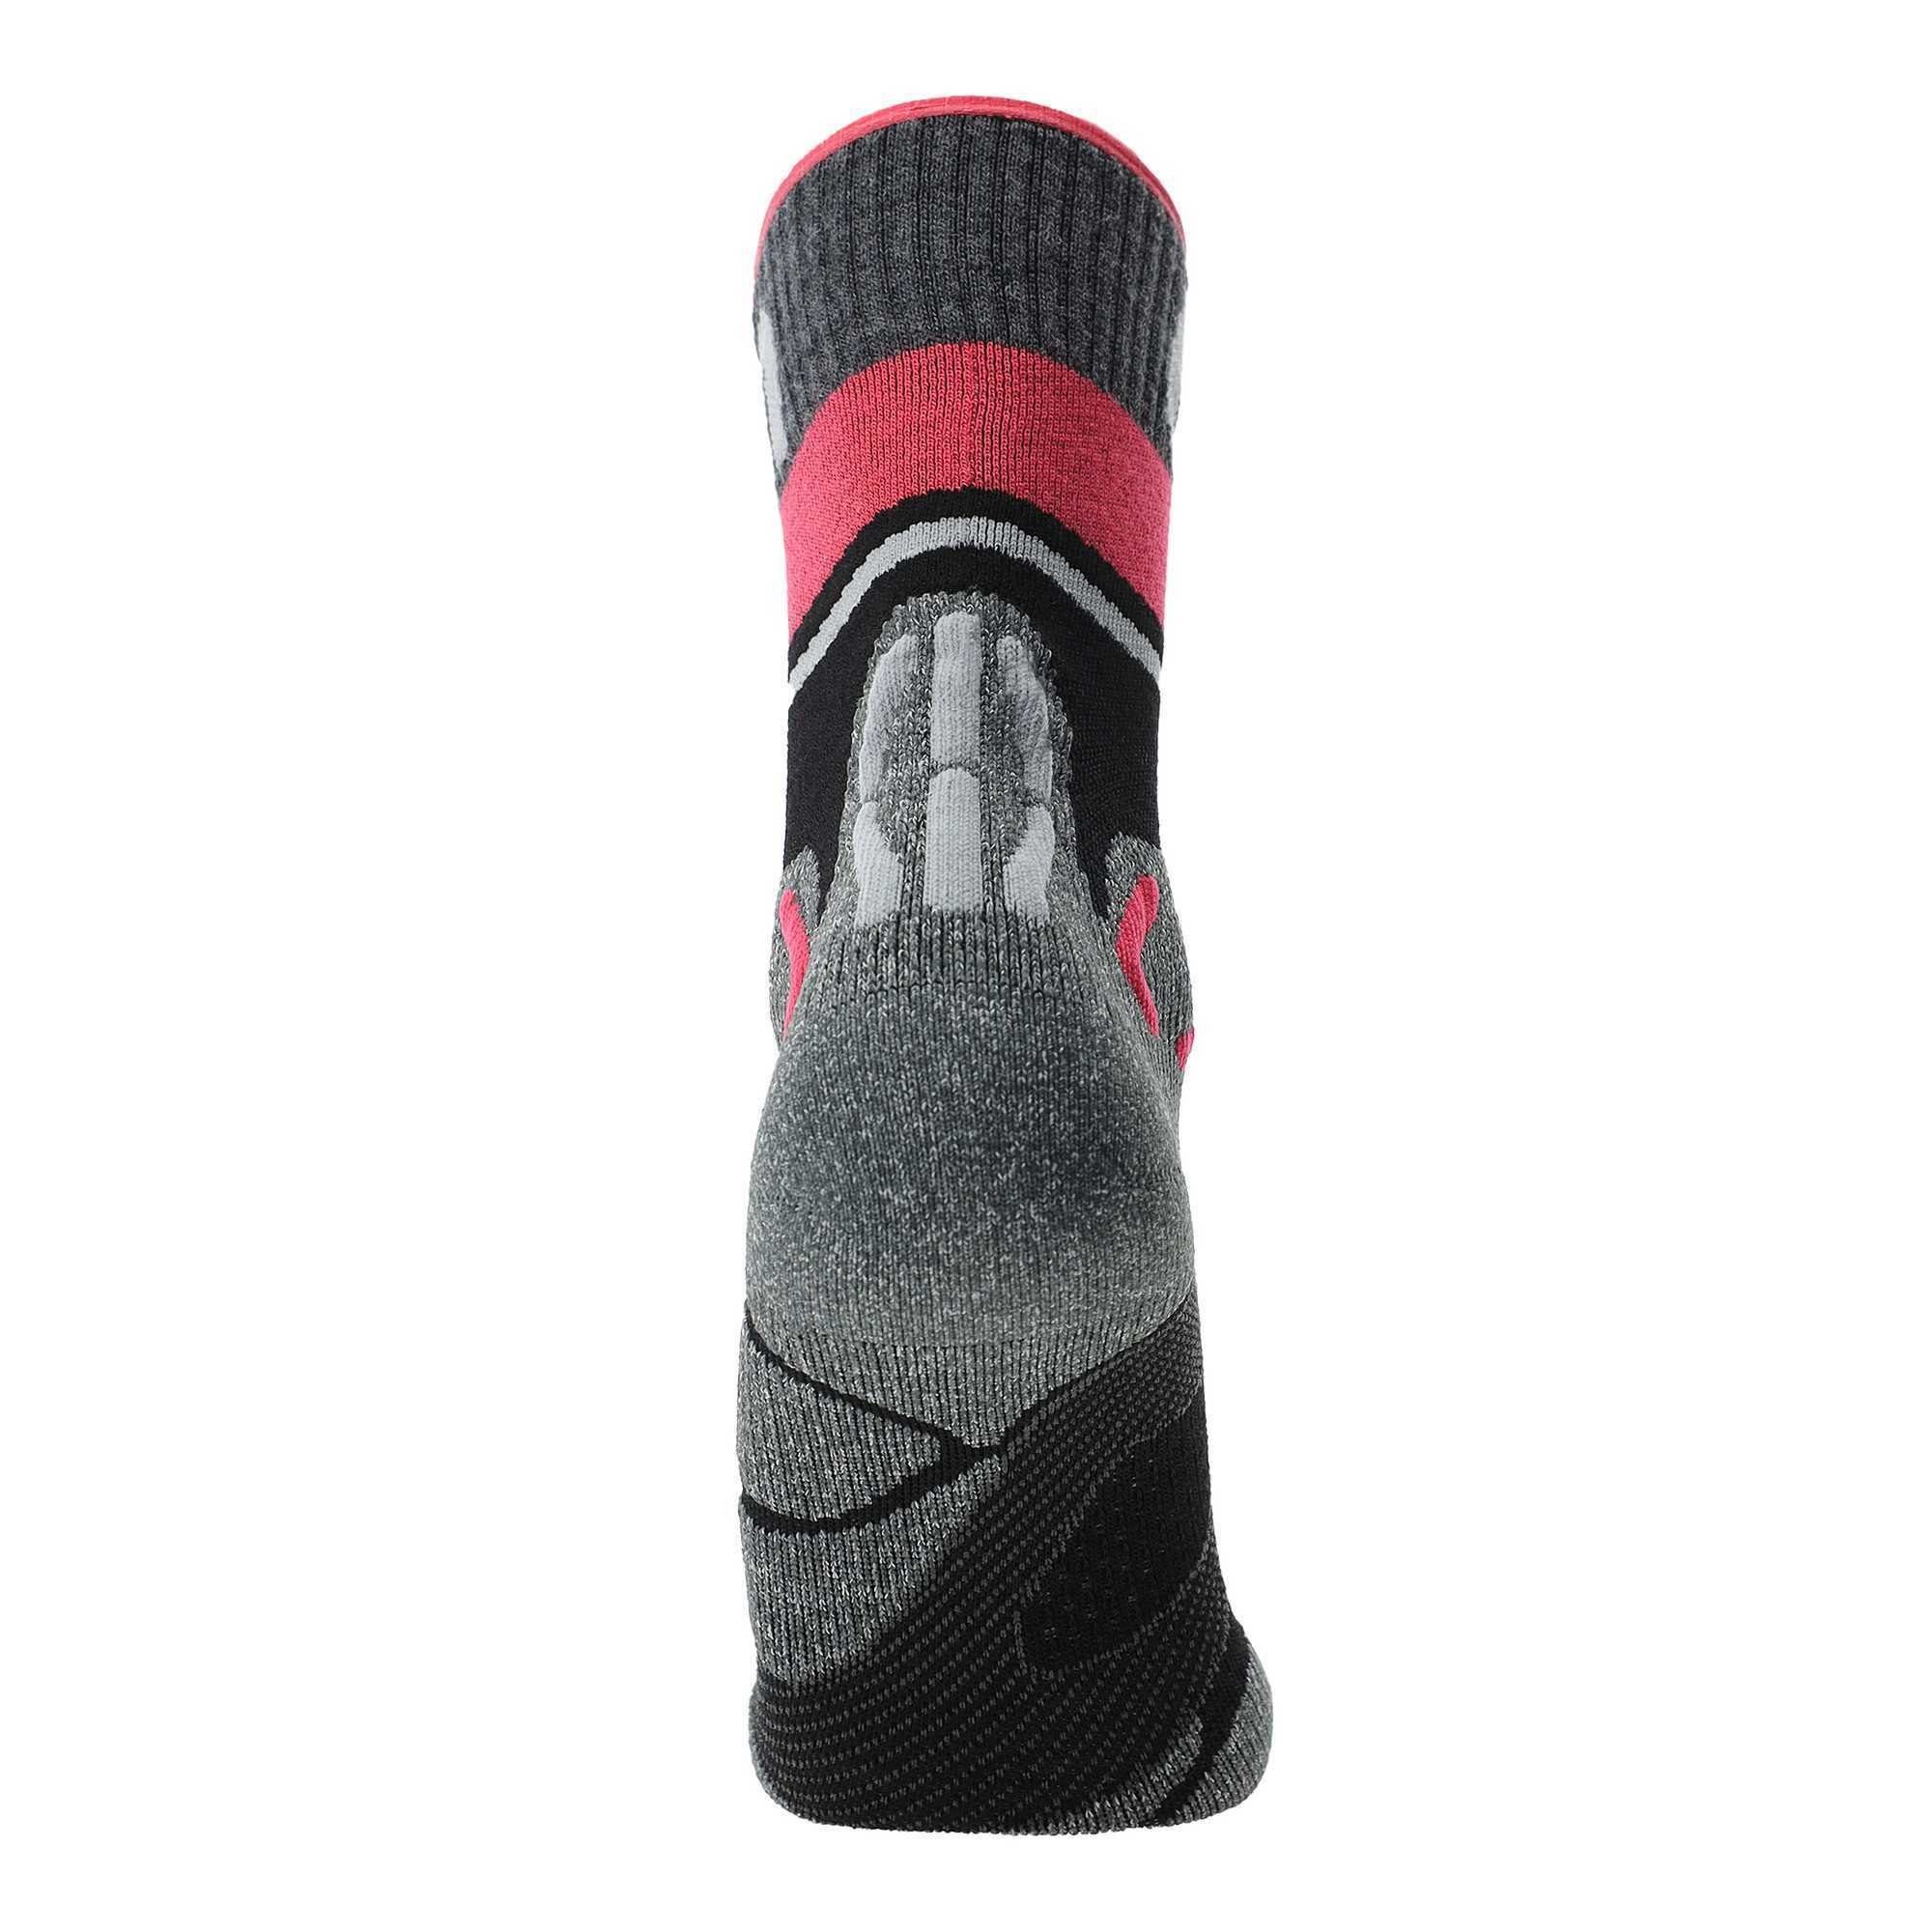 UYN Sportsocken - One - Black Trekking Pink Socks Damen Socken Merino